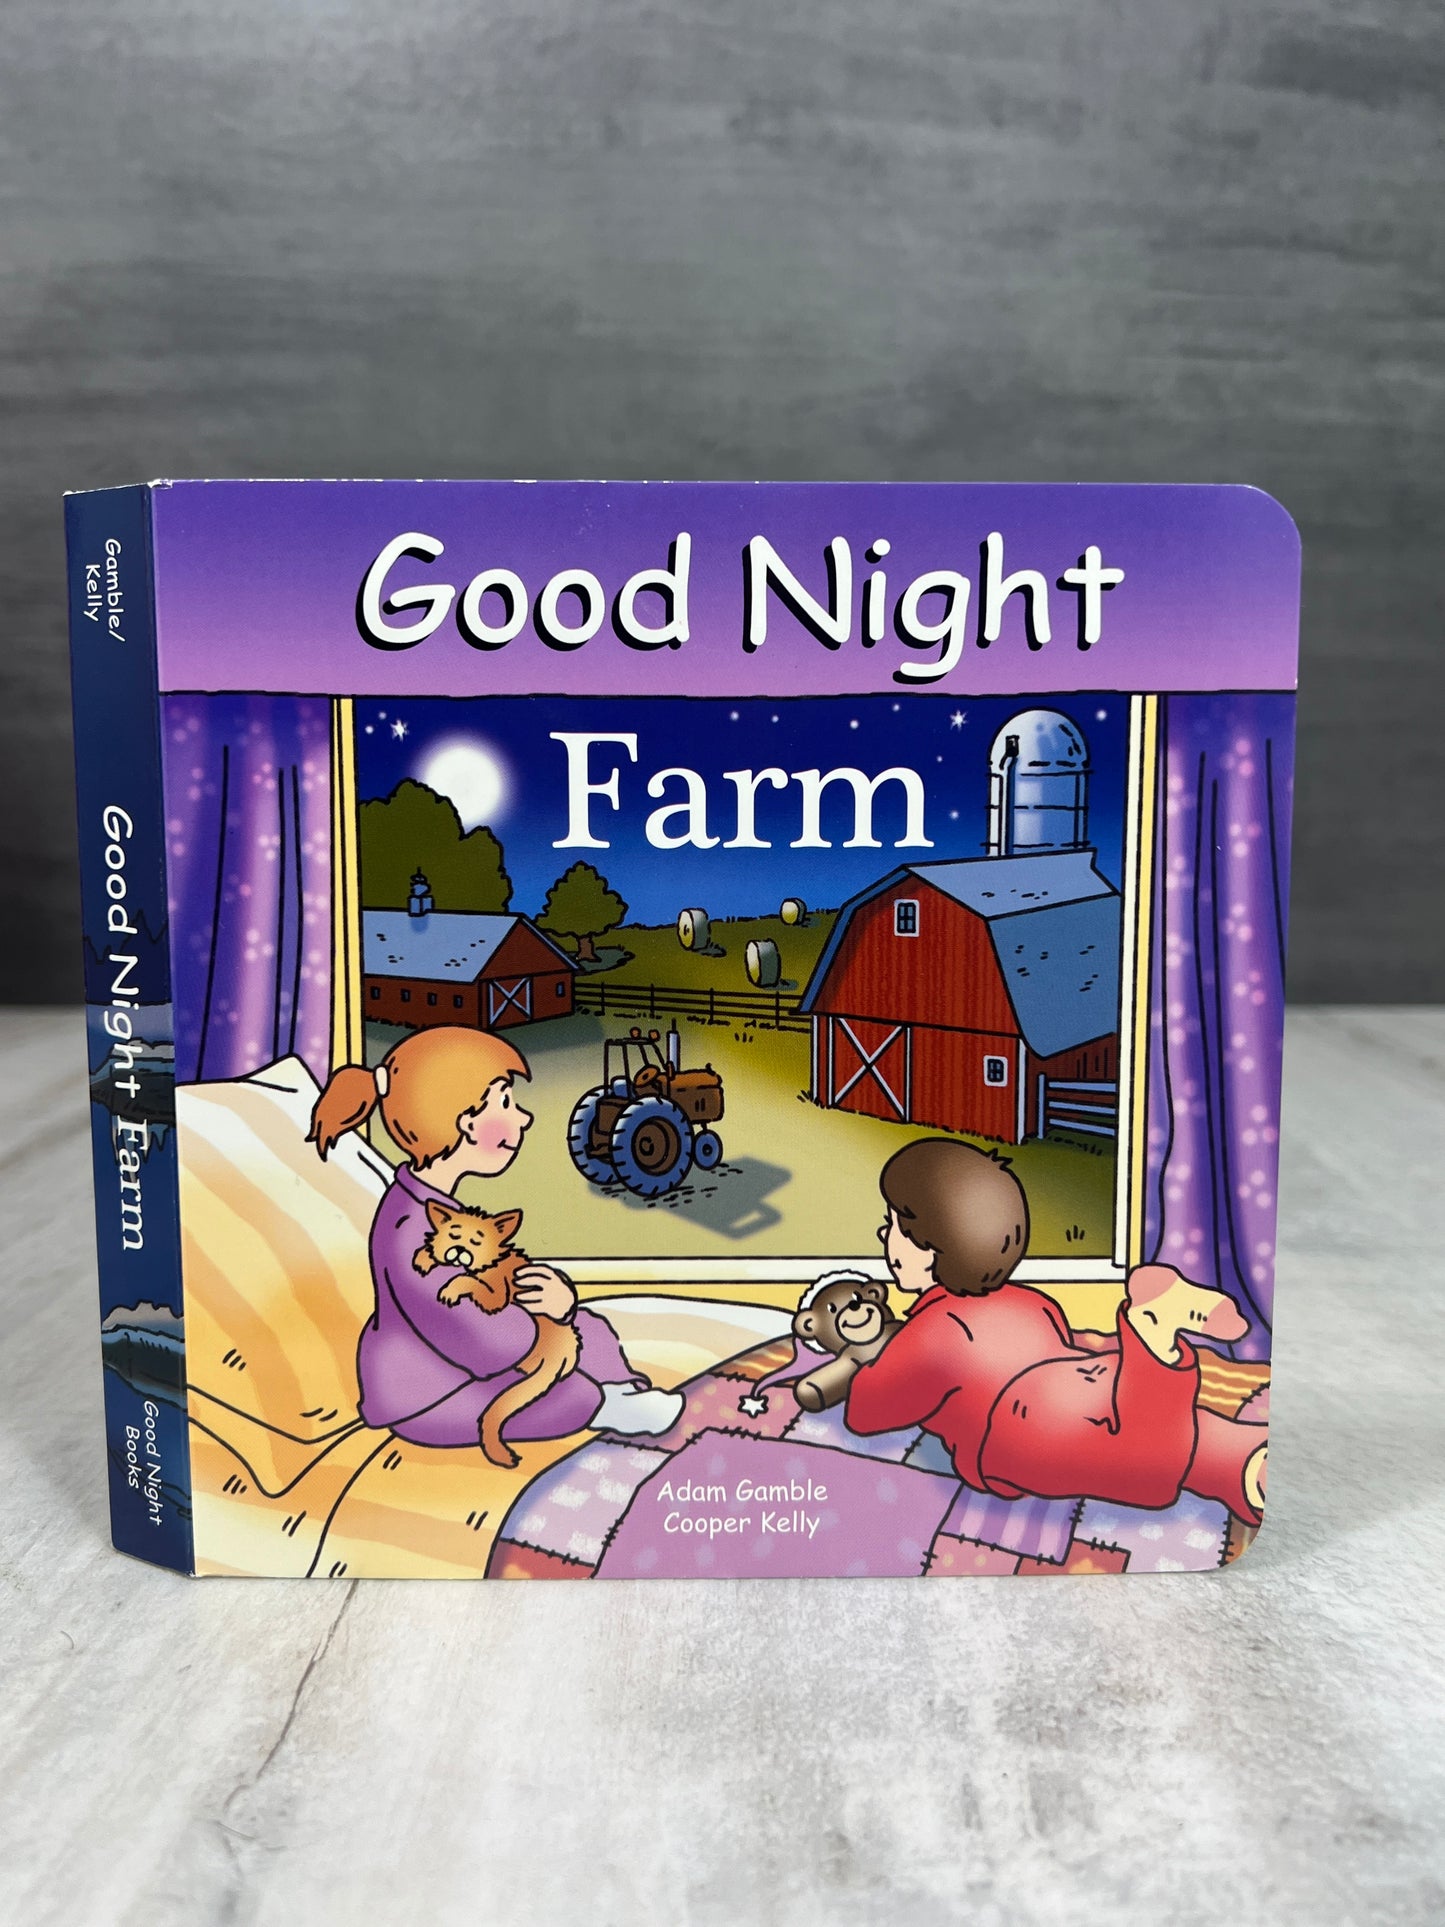 Good Night Farm